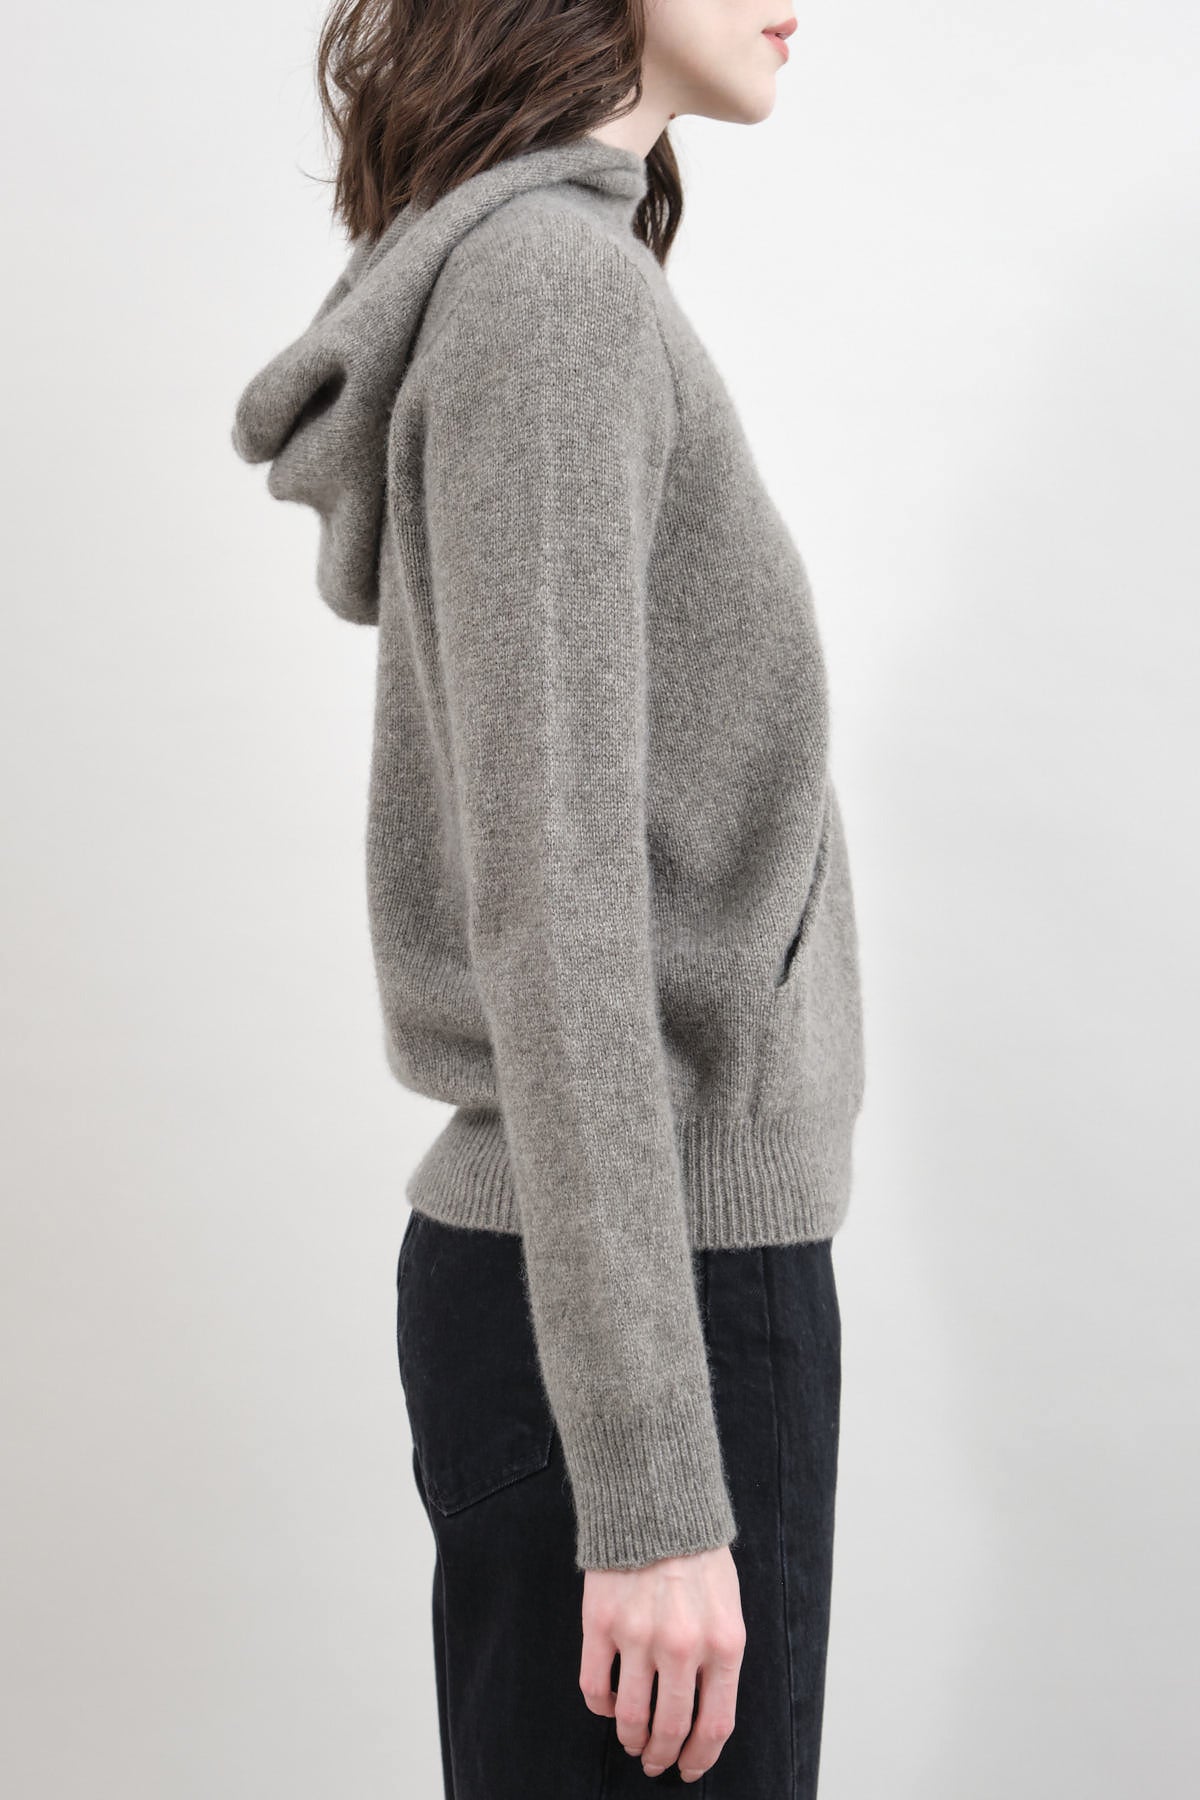 hooded cashmere sweater evam eva